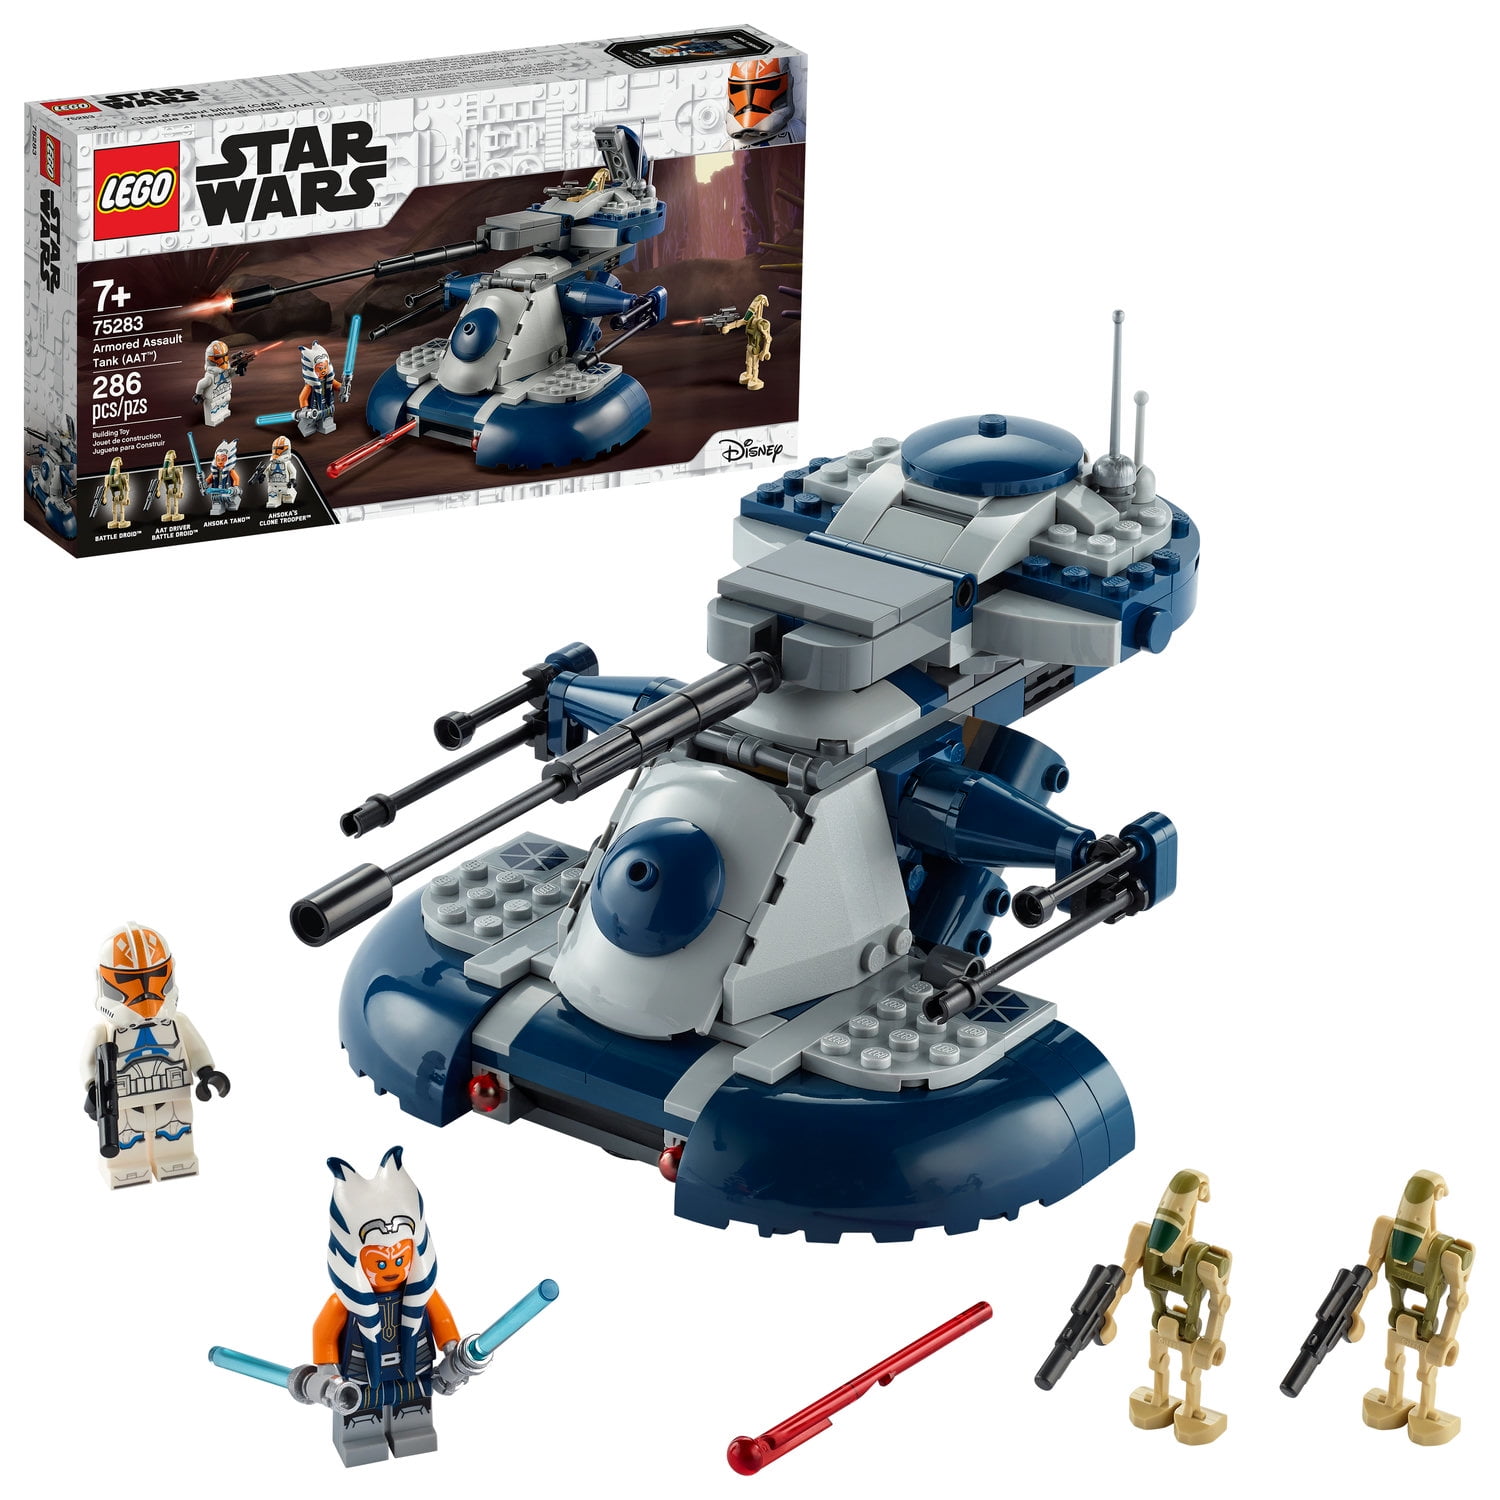 LEGO Star Wars NEU Set 75280 Clone Troopers der 501 Legion OVP 